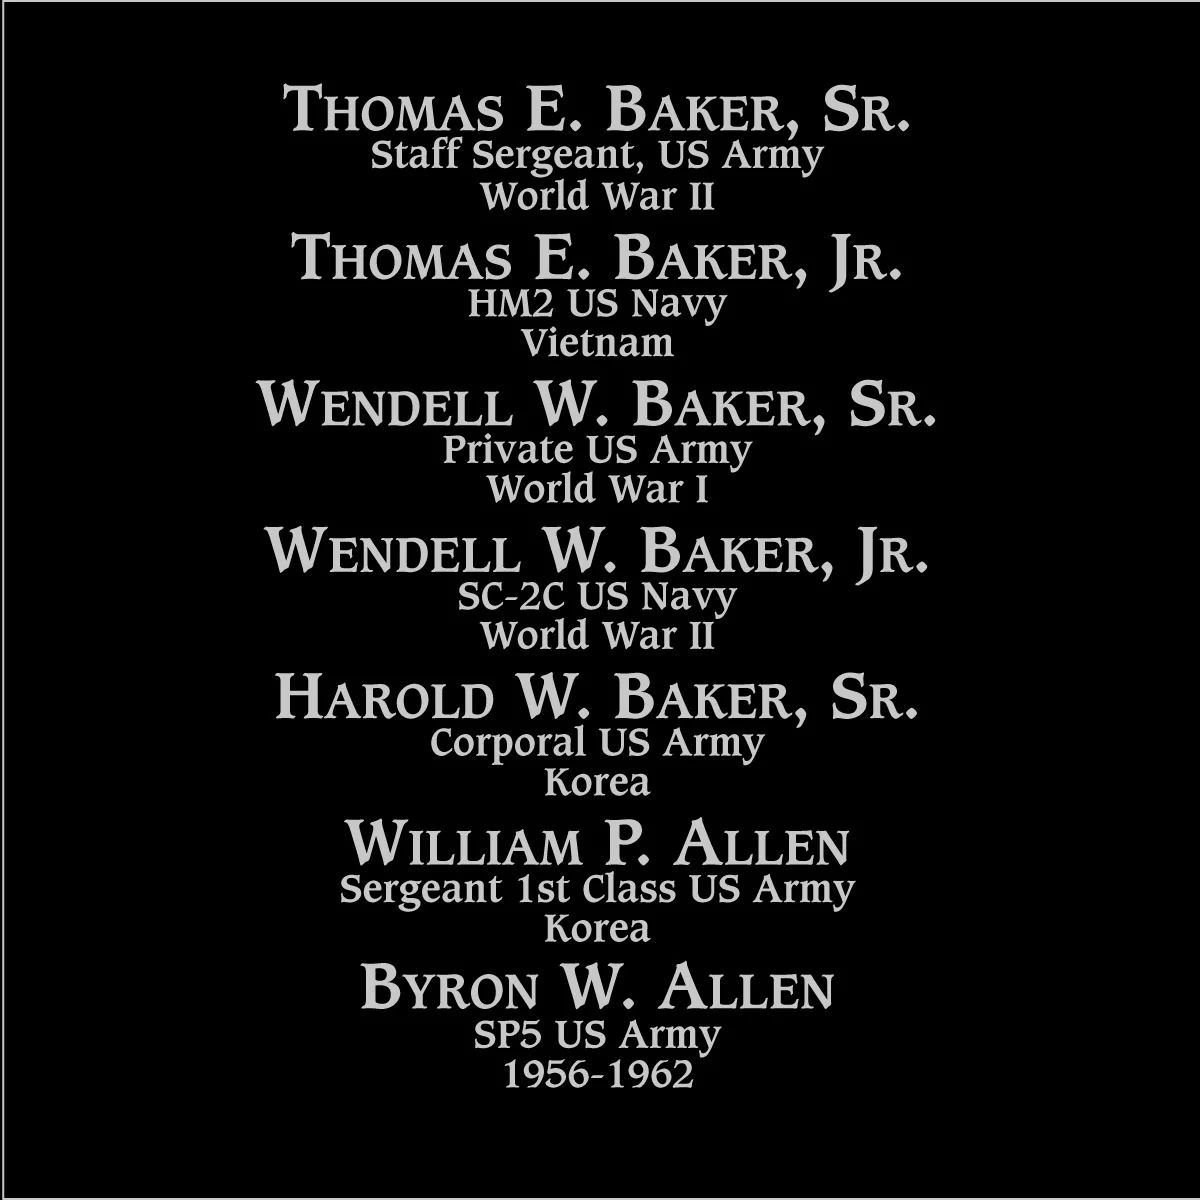 Thomas E. “Cookie” Baker, sr